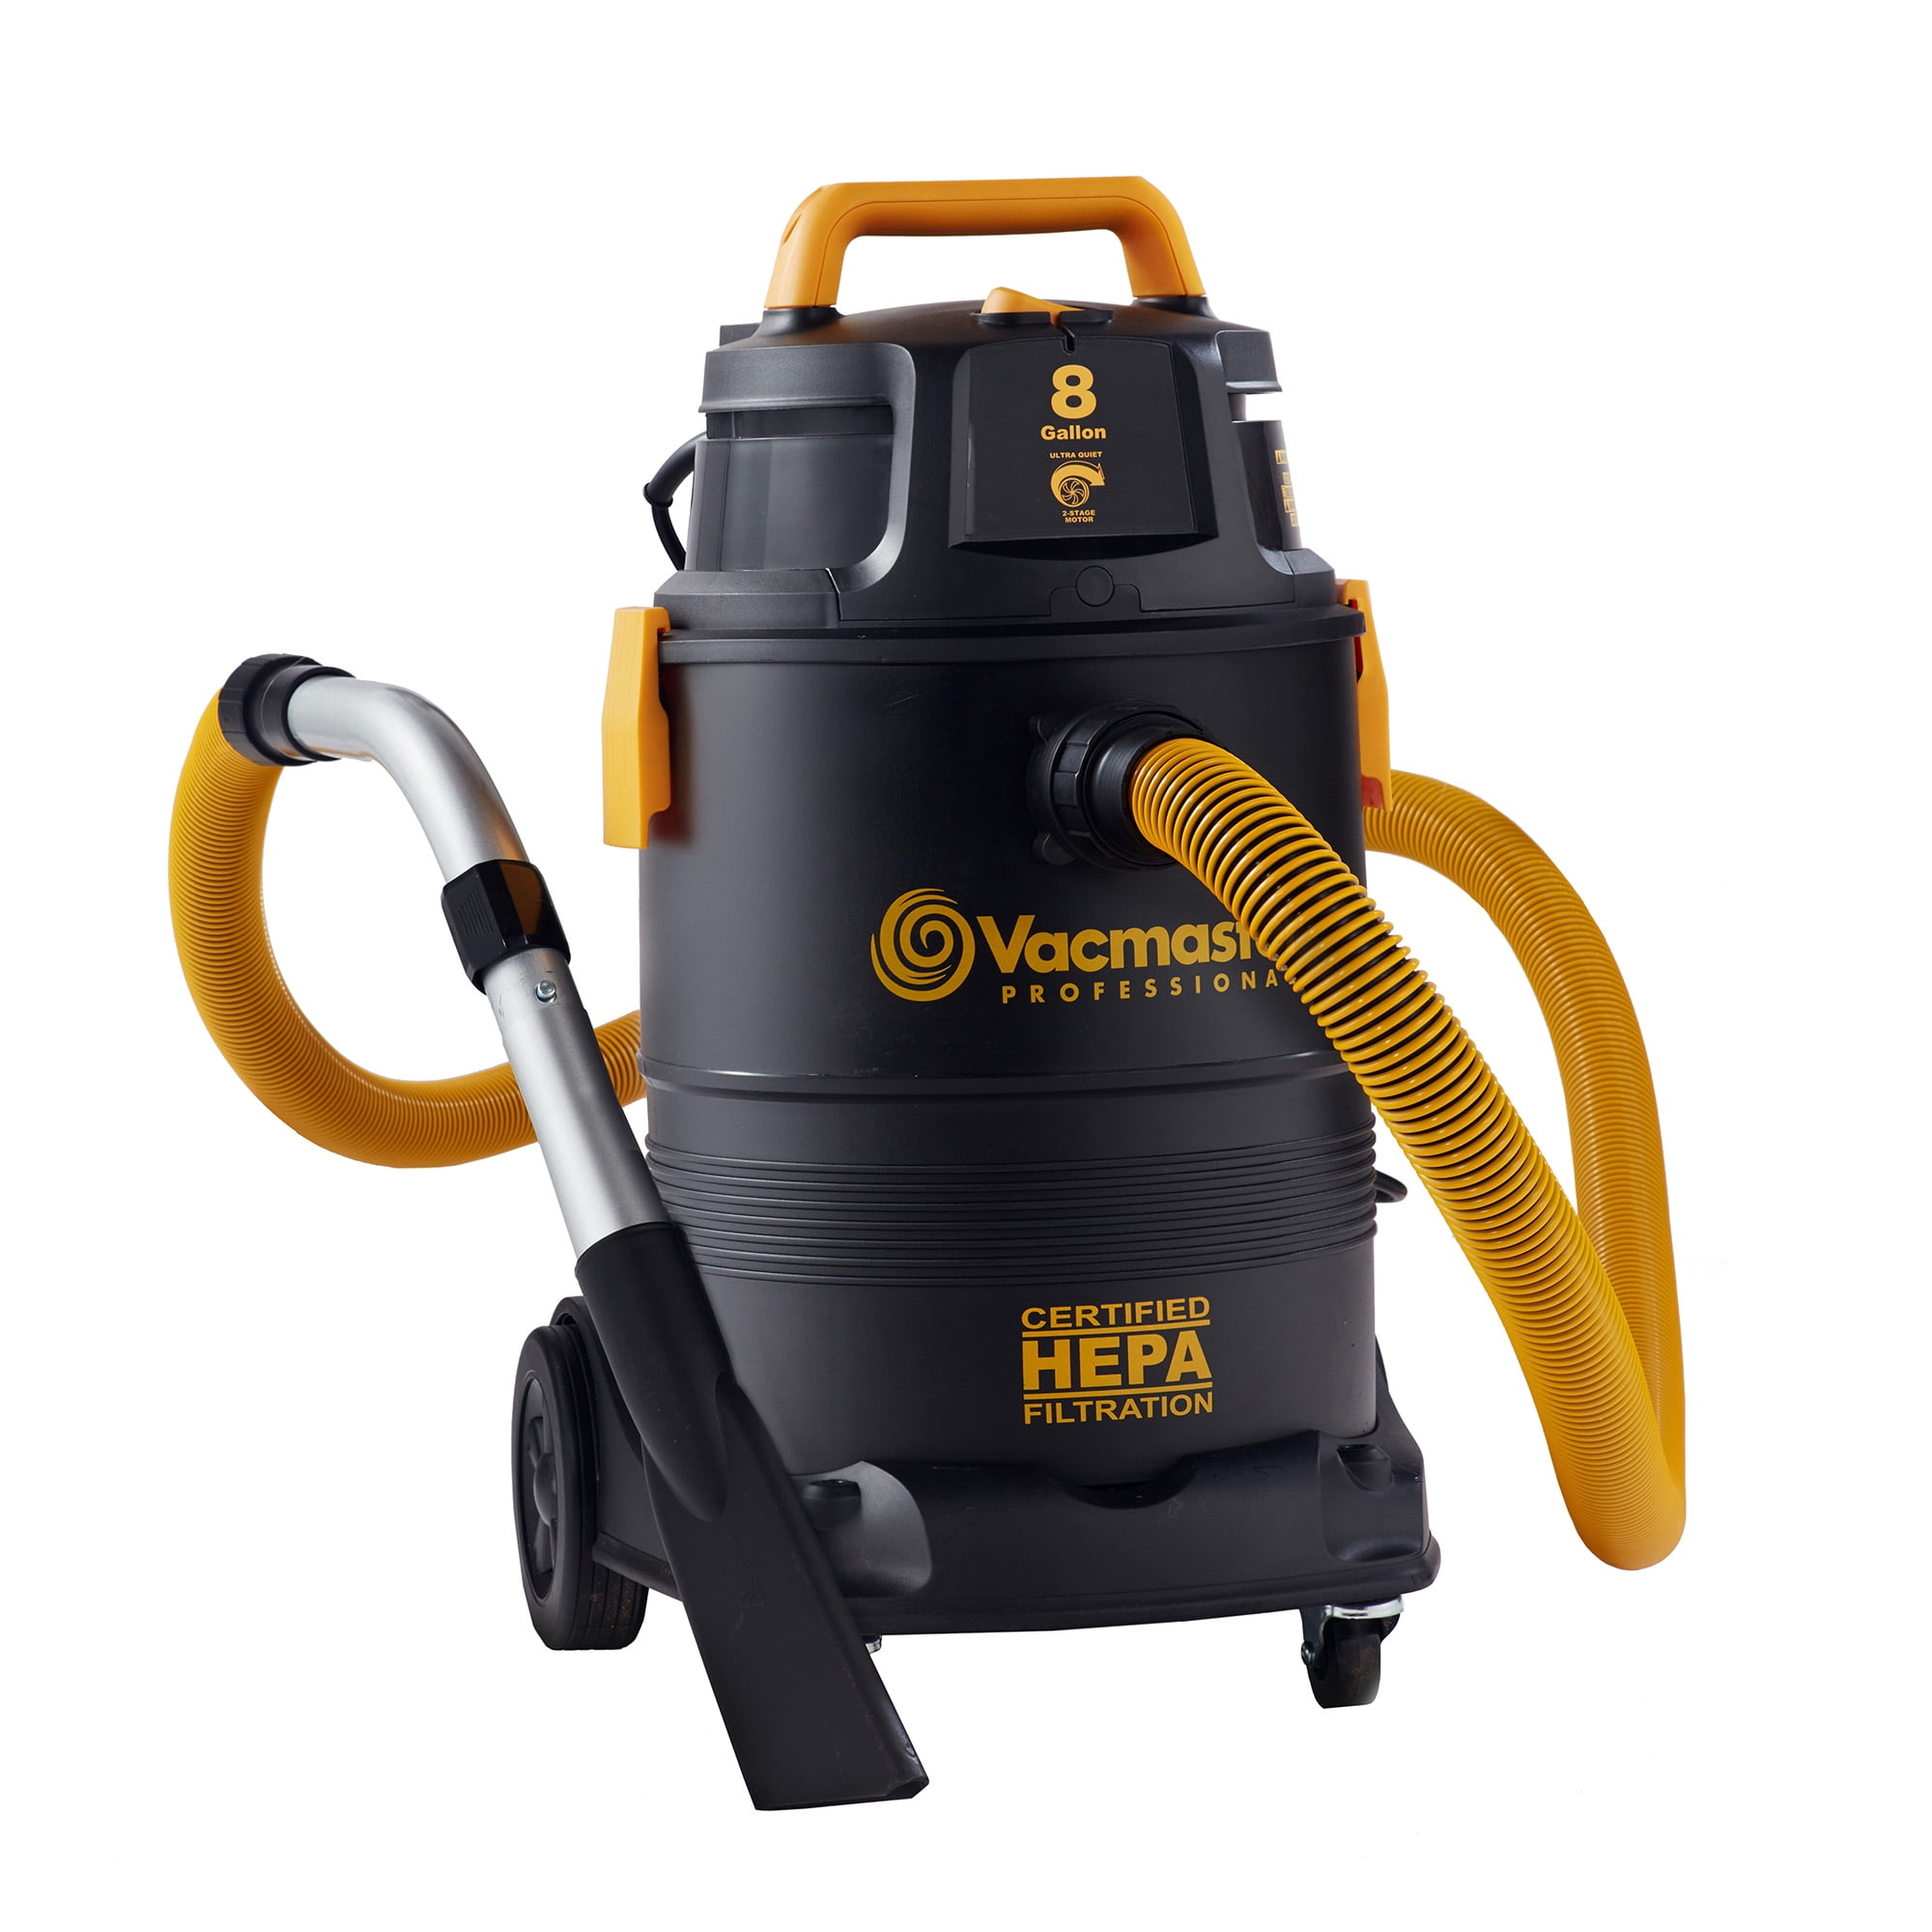 Vacmaster VK809PIWR Black Wet/Dry Canister Vacuum Cleaner for sale online 